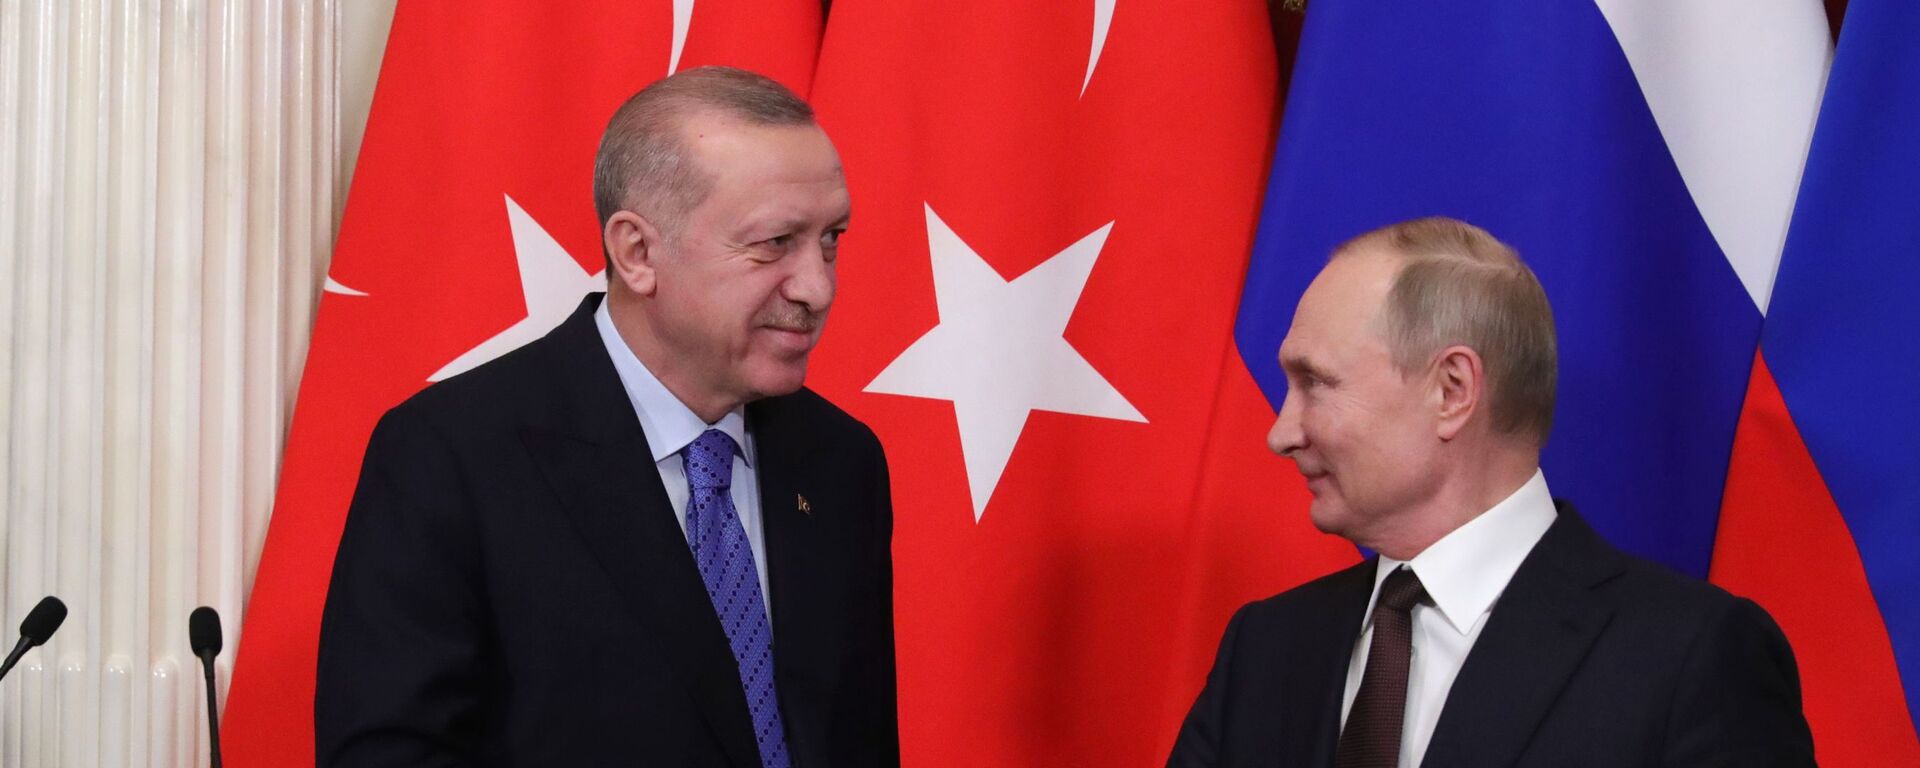 Президент РФ Владимир Путин и президент Турции Реджеп Тайип Эрдоган - Sputnik Грузия, 1920, 18.02.2021